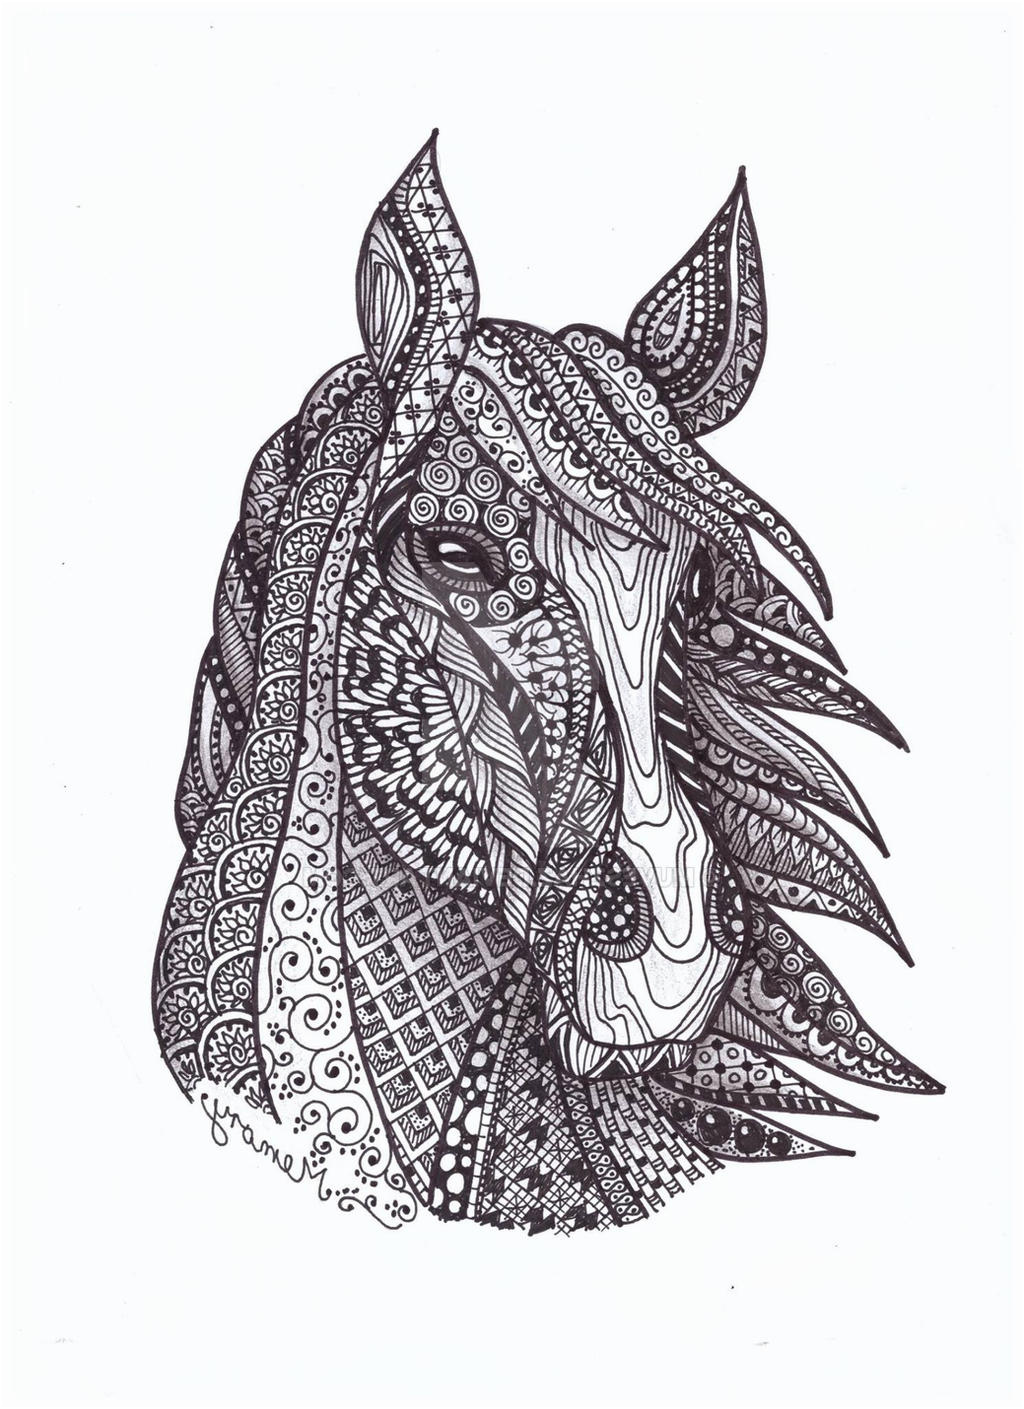 Zentangle horse by Inhoff Anita